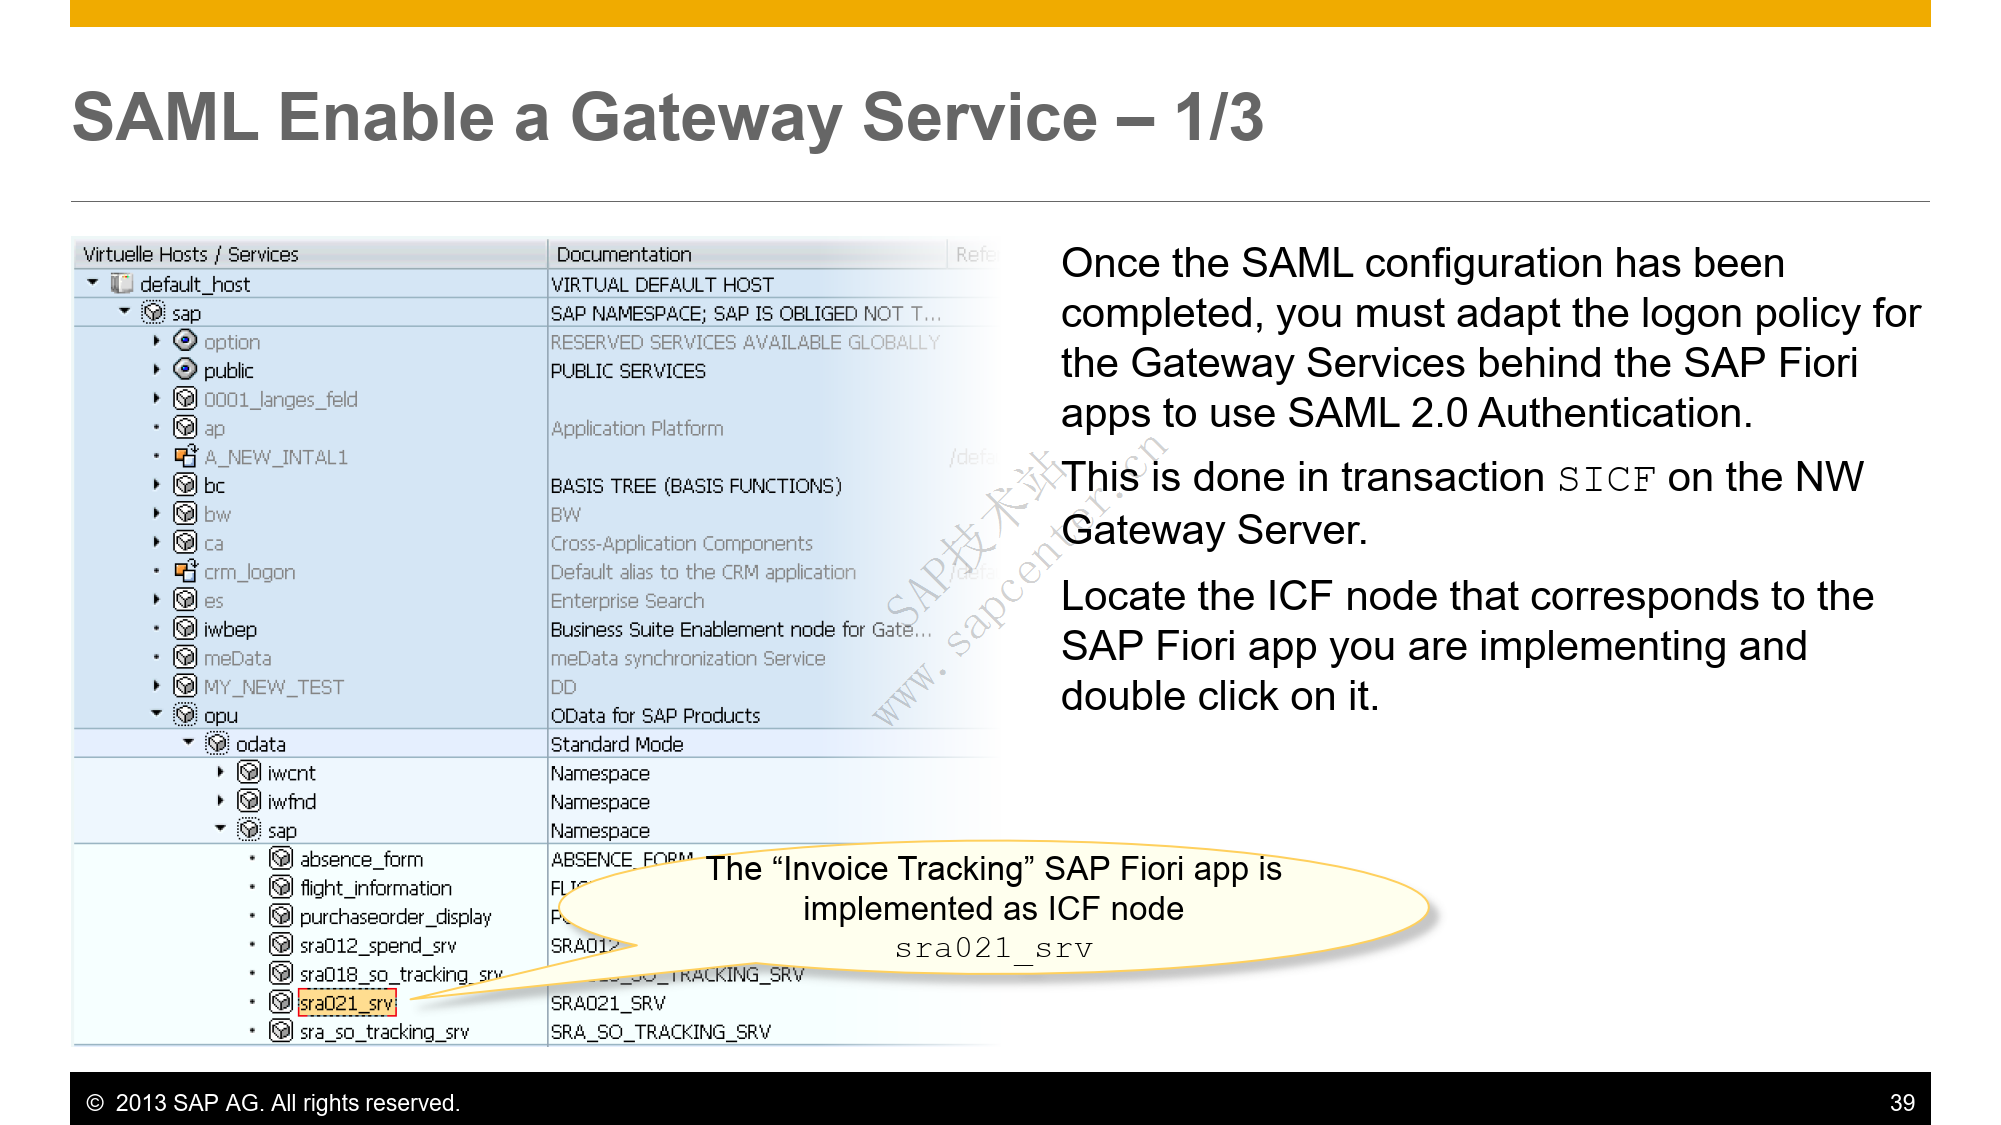 SAP Fiori SSL SAML Overview_39.png